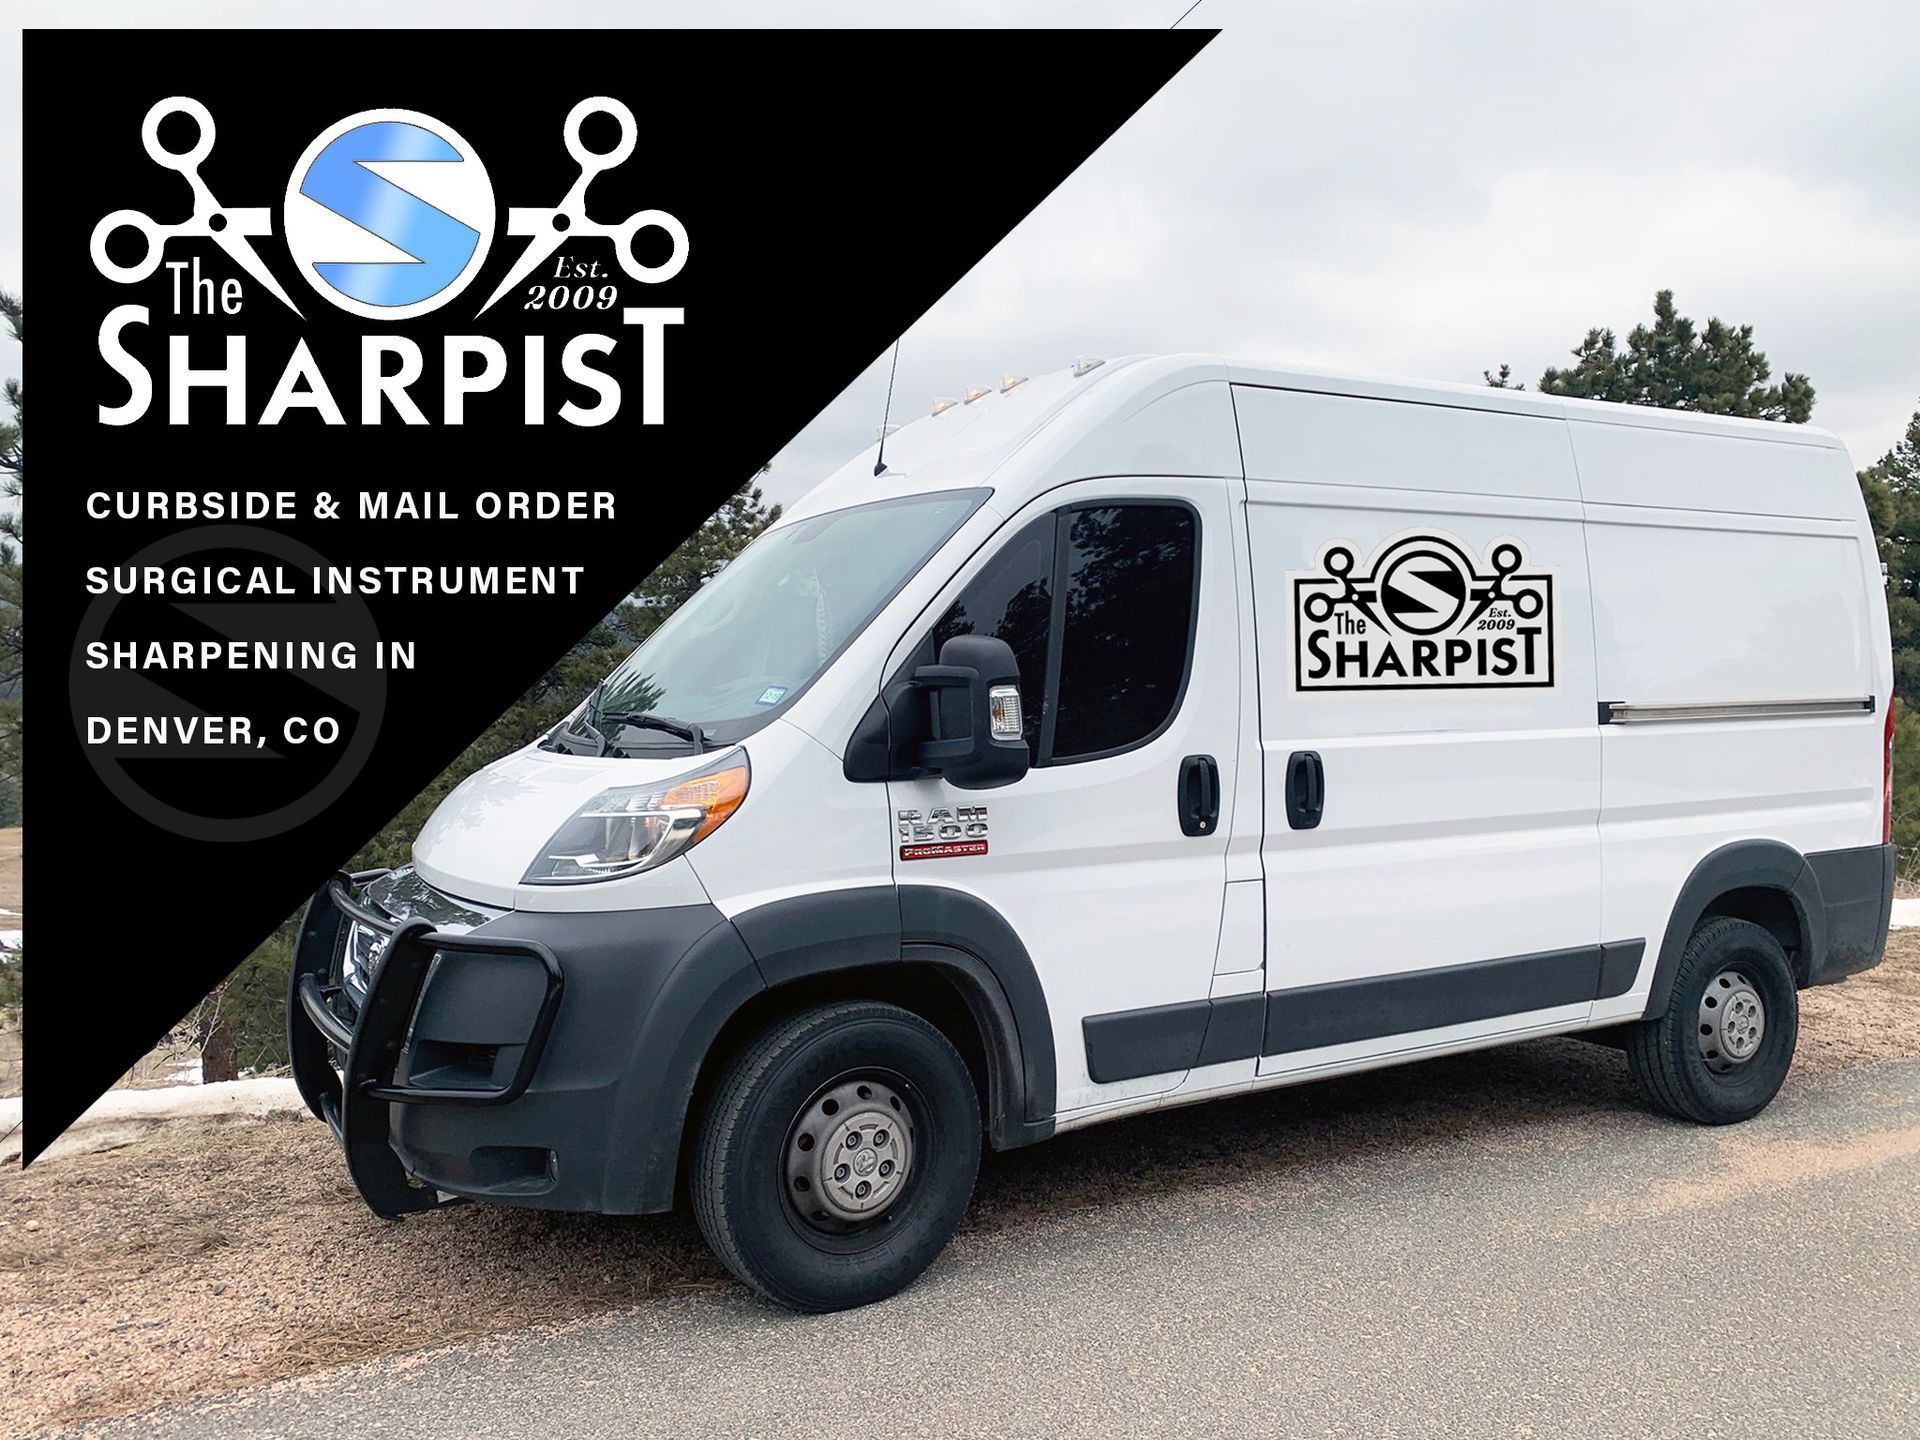 The Sharpist's mobile workshop on wheels